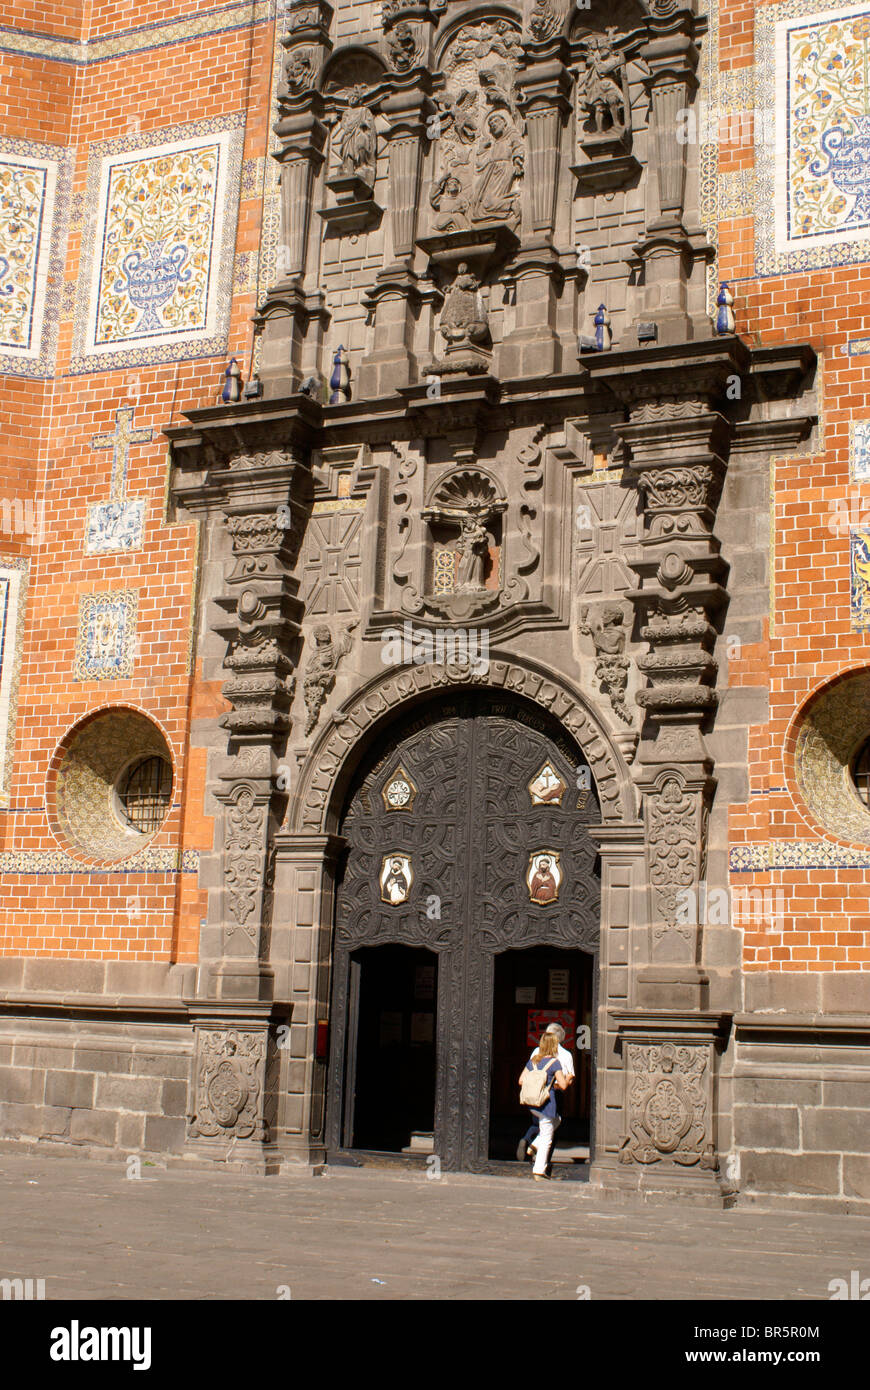 Carreaux Talavera de la façade de style baroque mexicain Templo San Francisco church dans la ville de Puebla, Mexique Banque D'Images